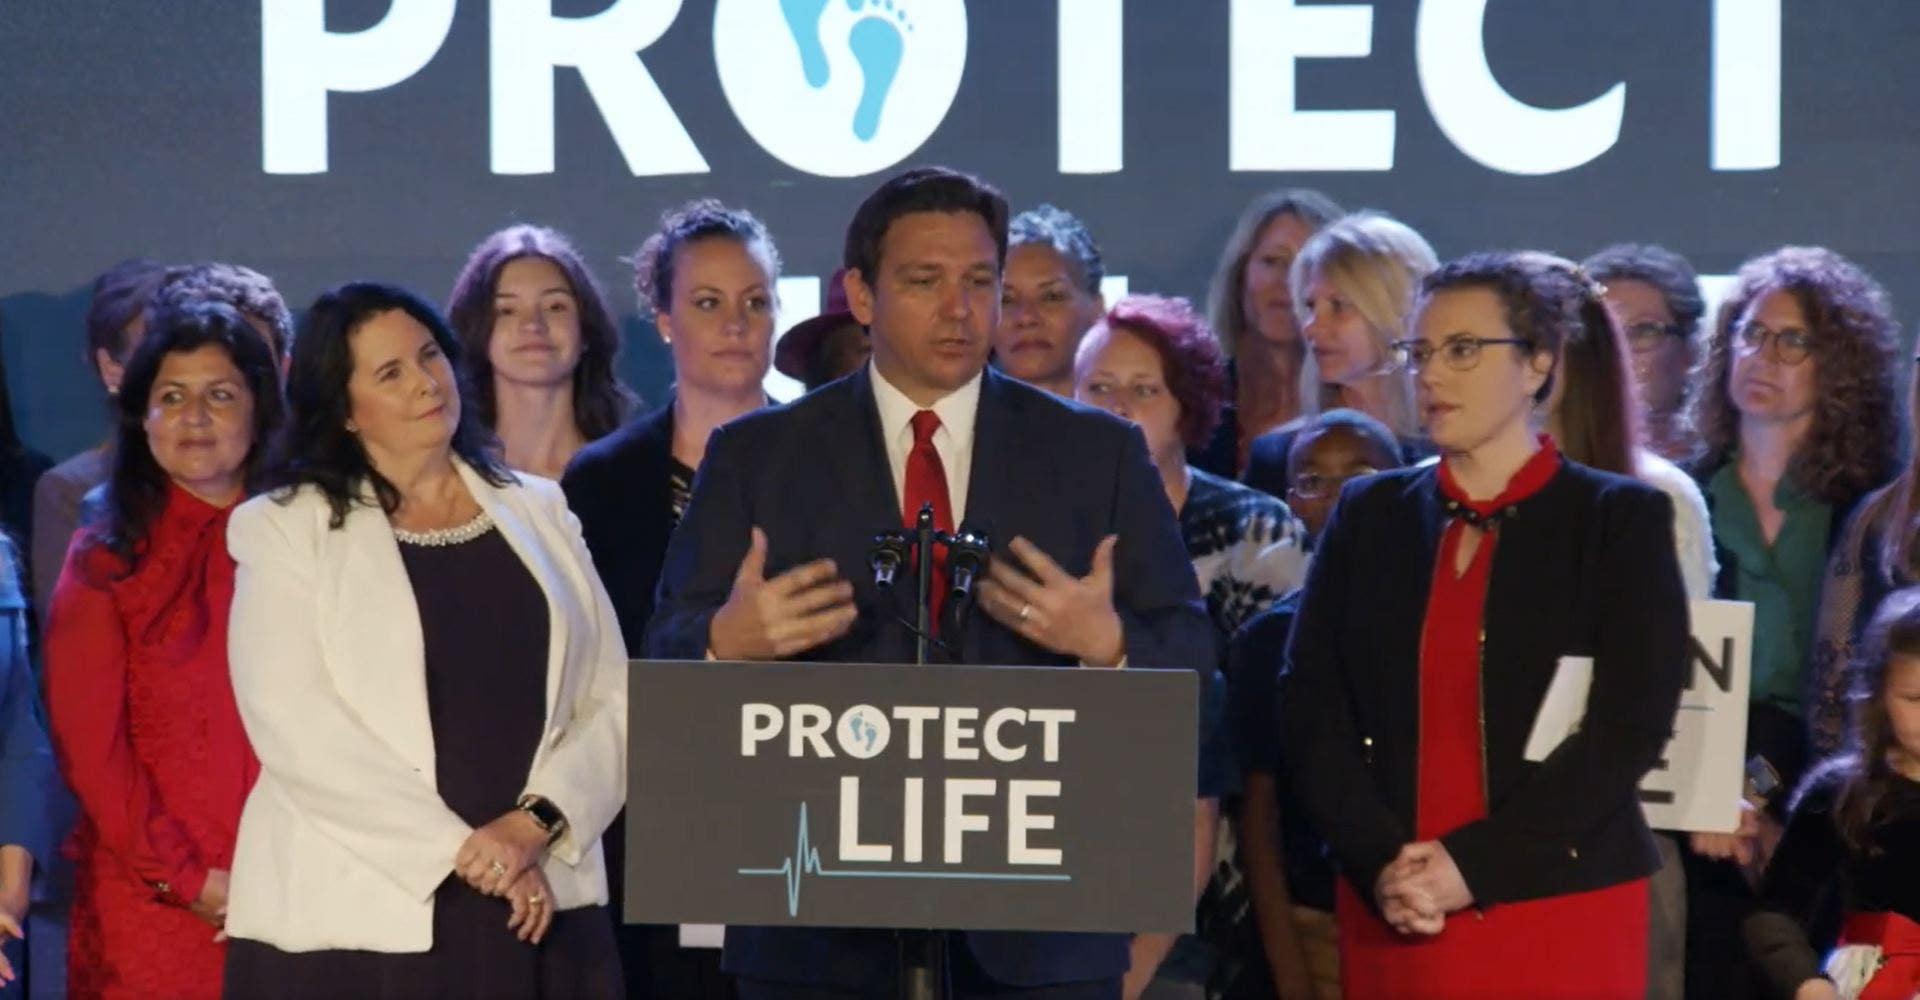 DeSantis signs 15-week abortion ban into law